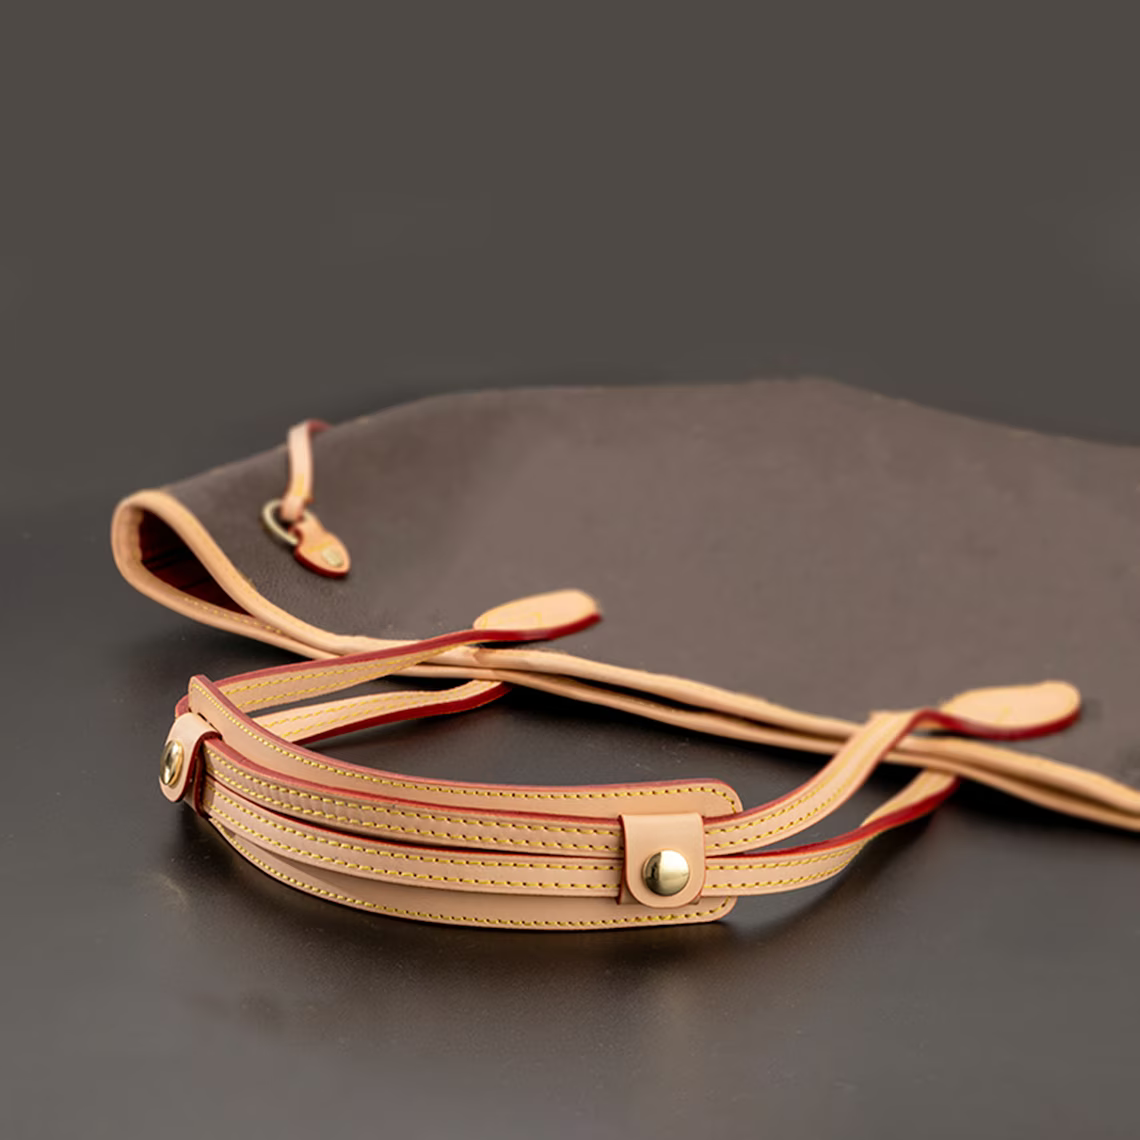 New design,High quality Vachette Leather Shoulder Strap Pad/Anti-slip